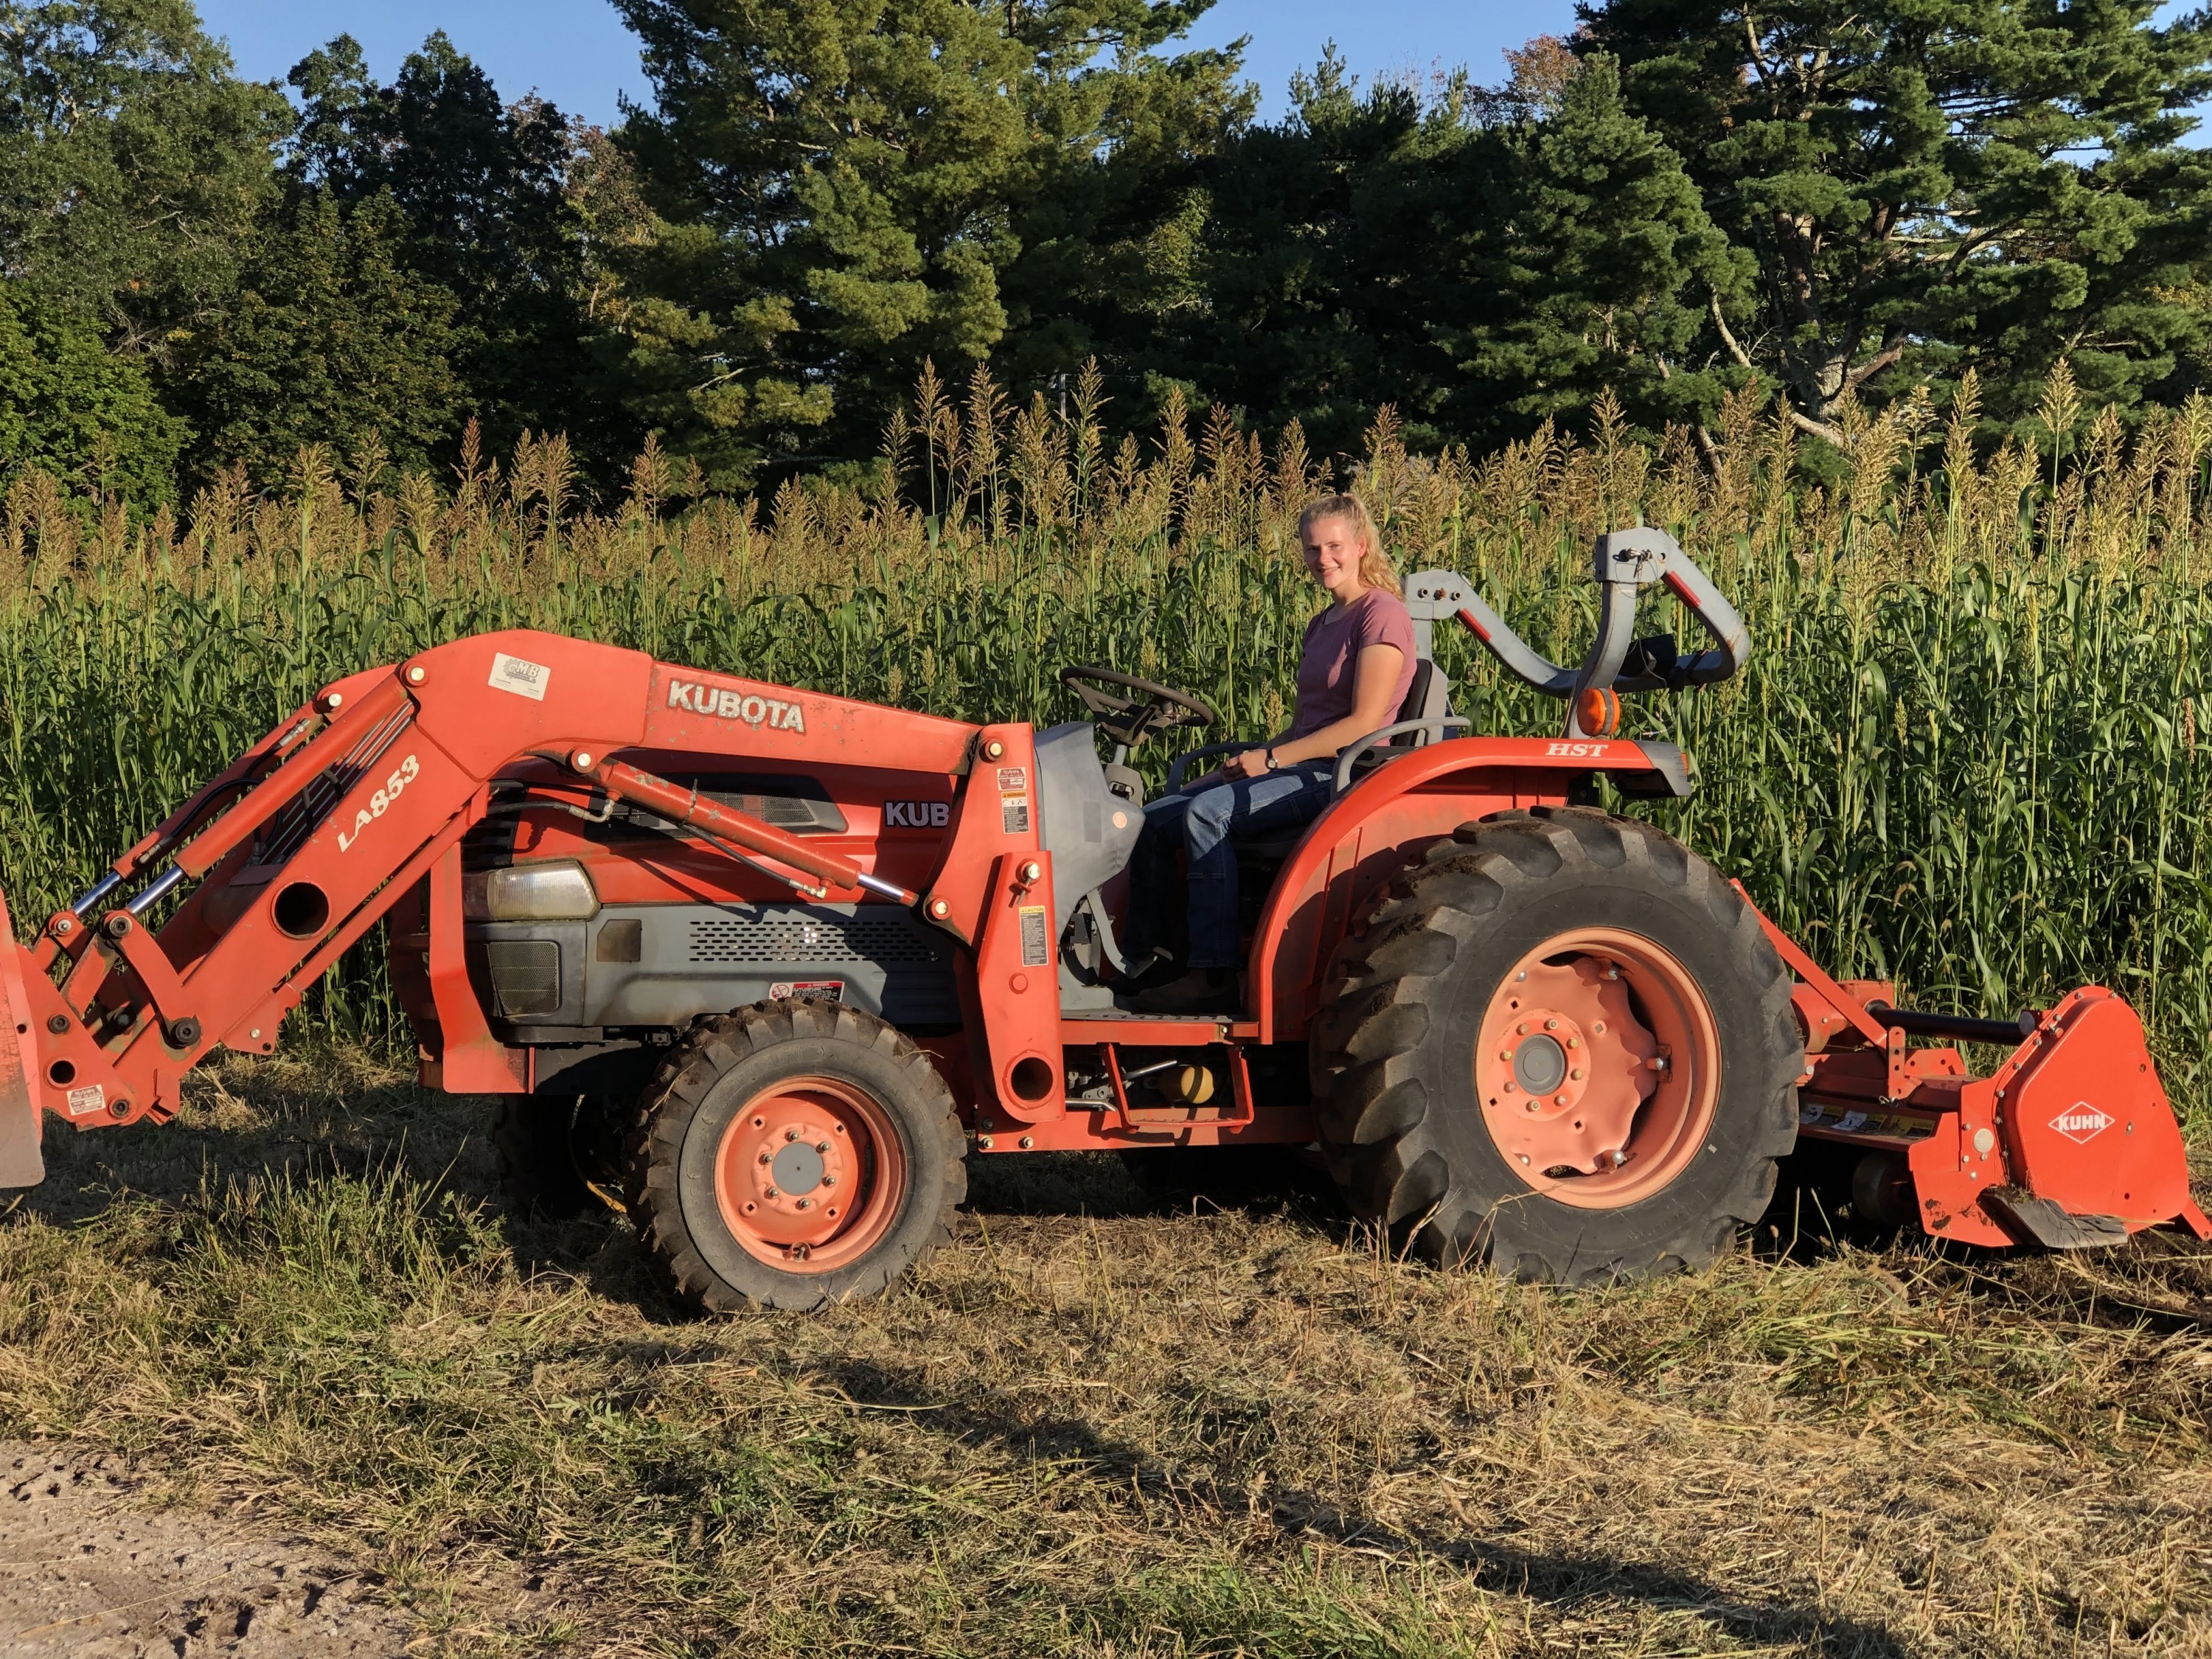 Celia in tractor